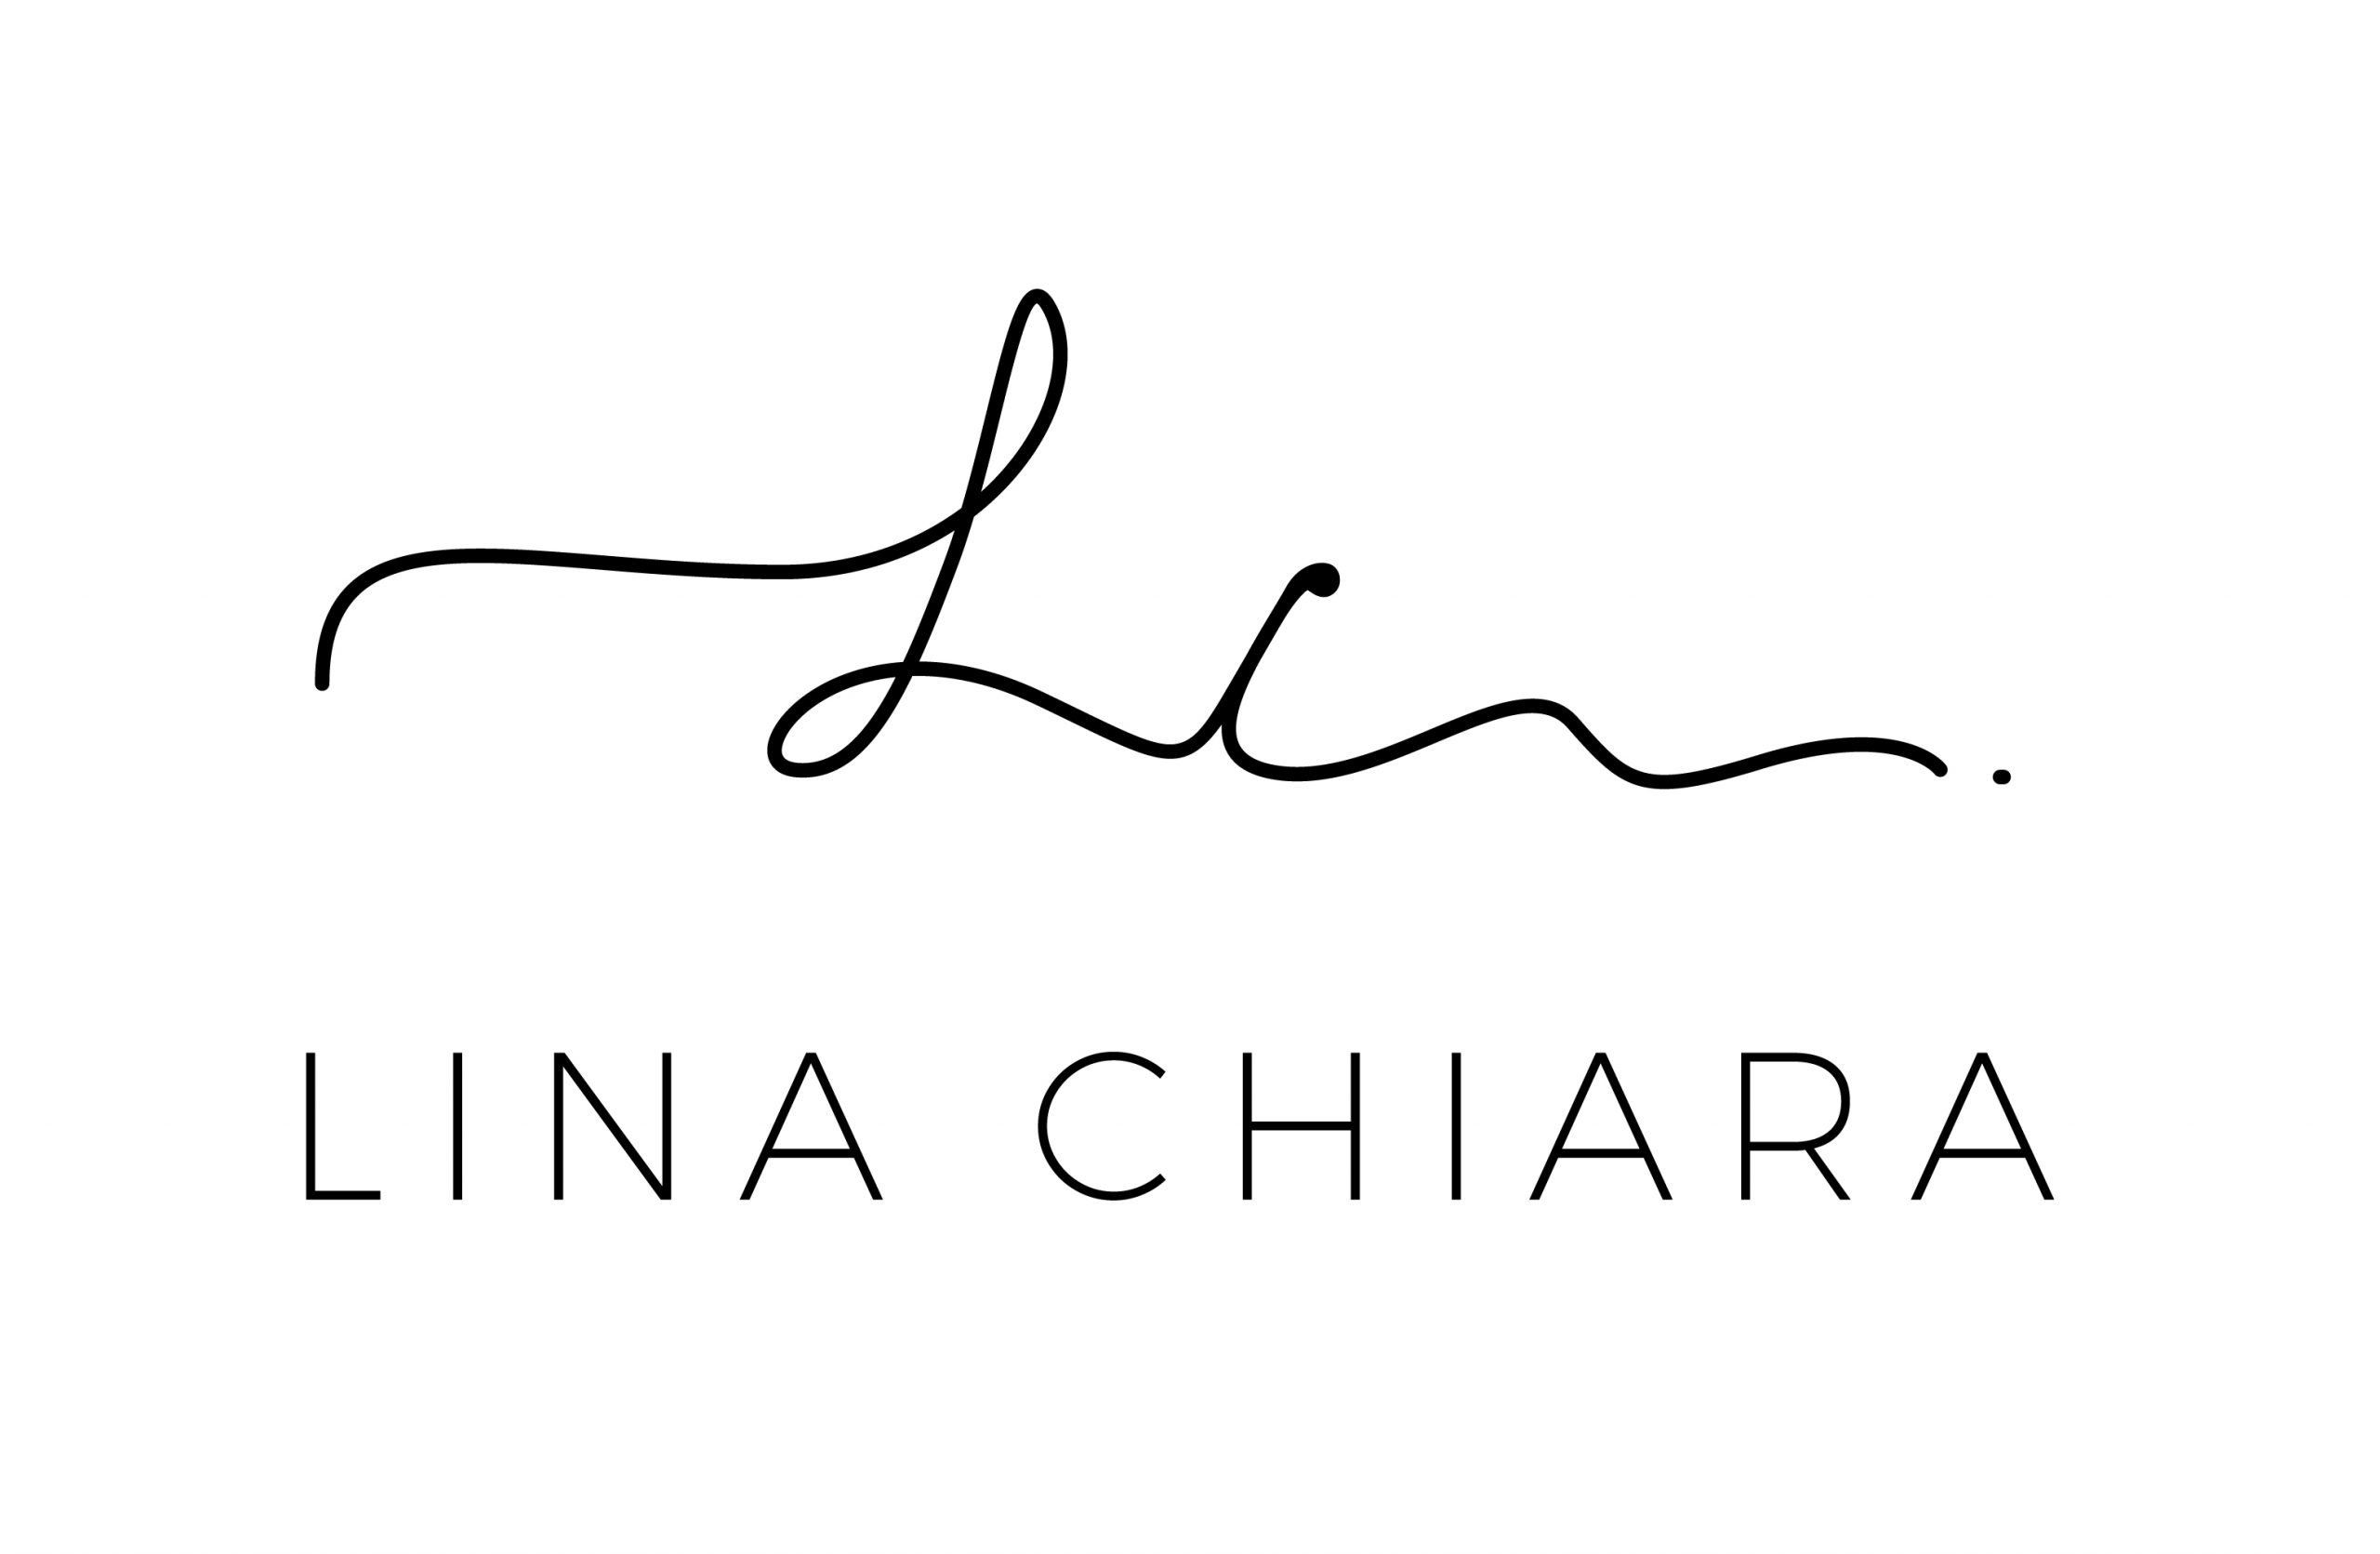 Lina Chiara